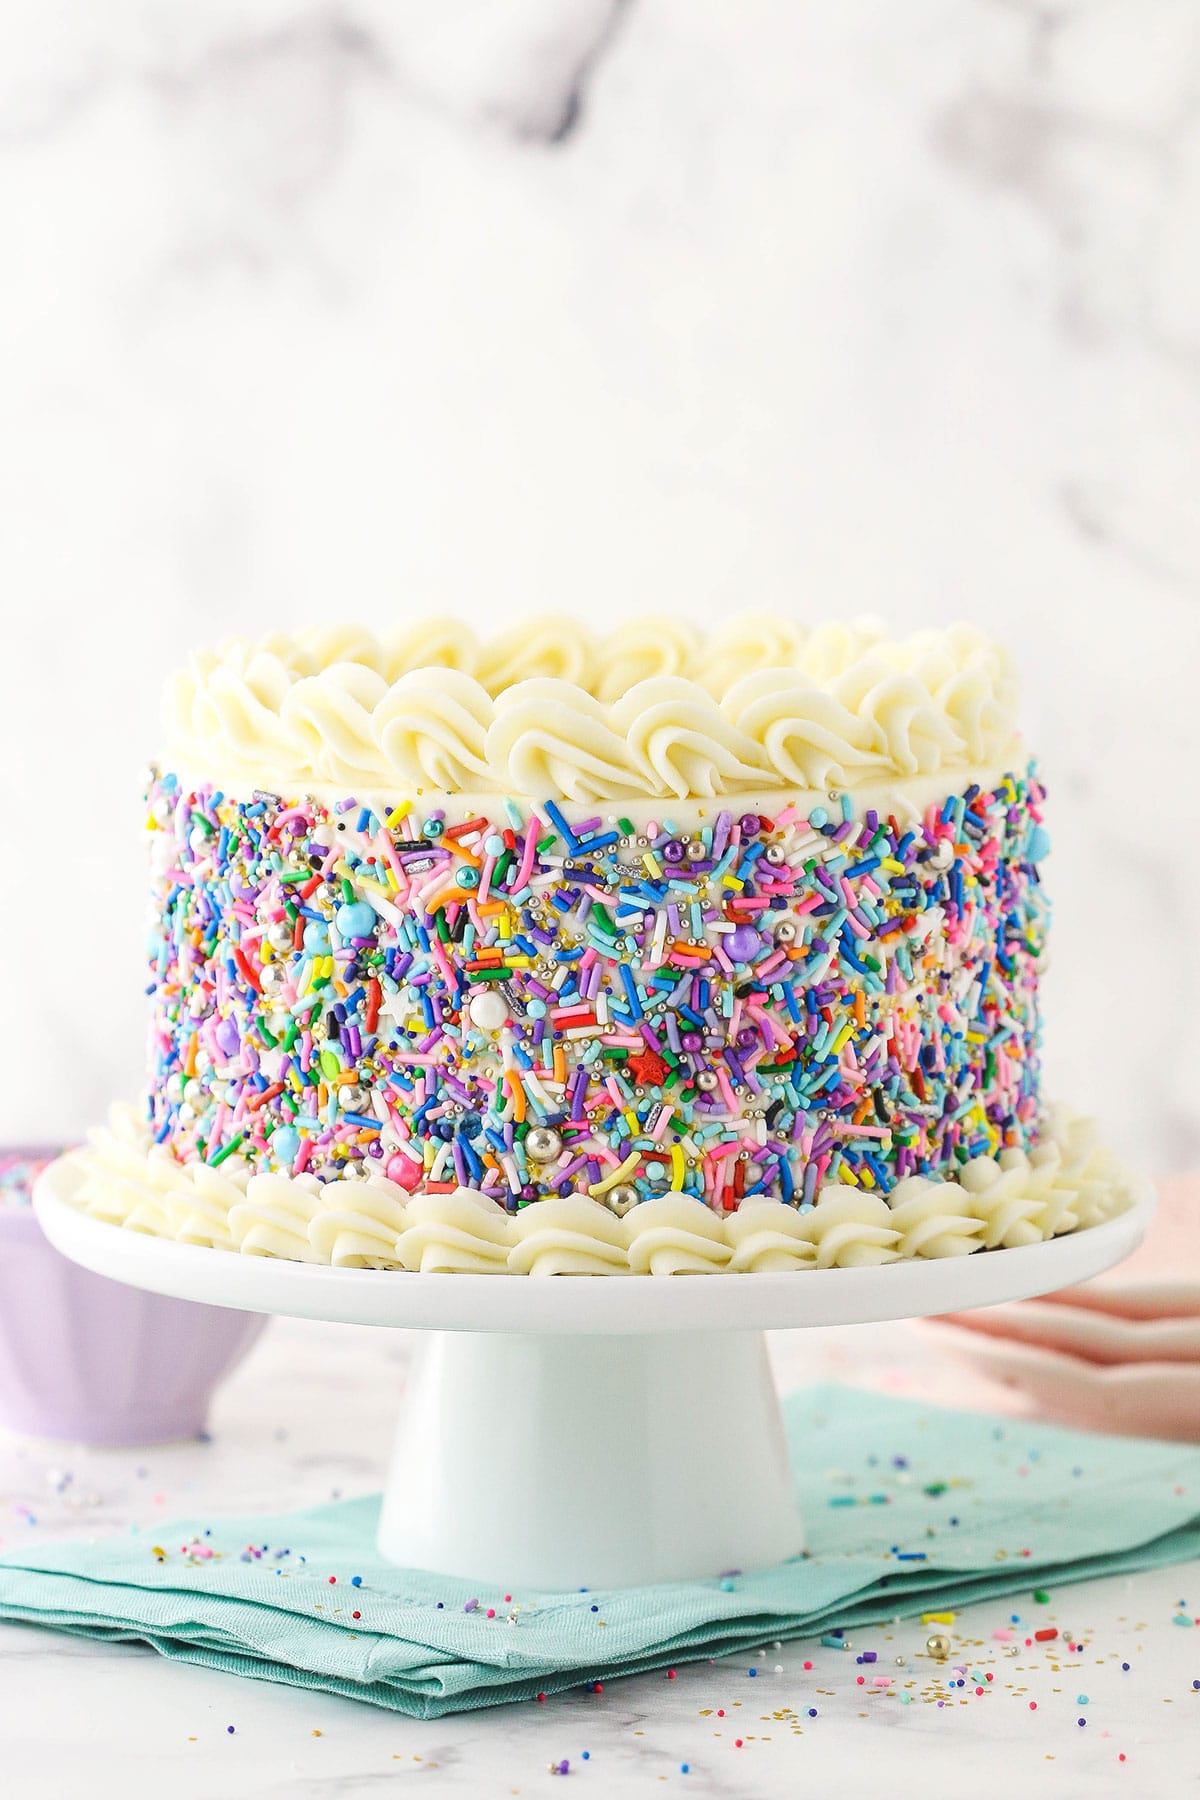 Mini shaped cake pan questions : r/Baking